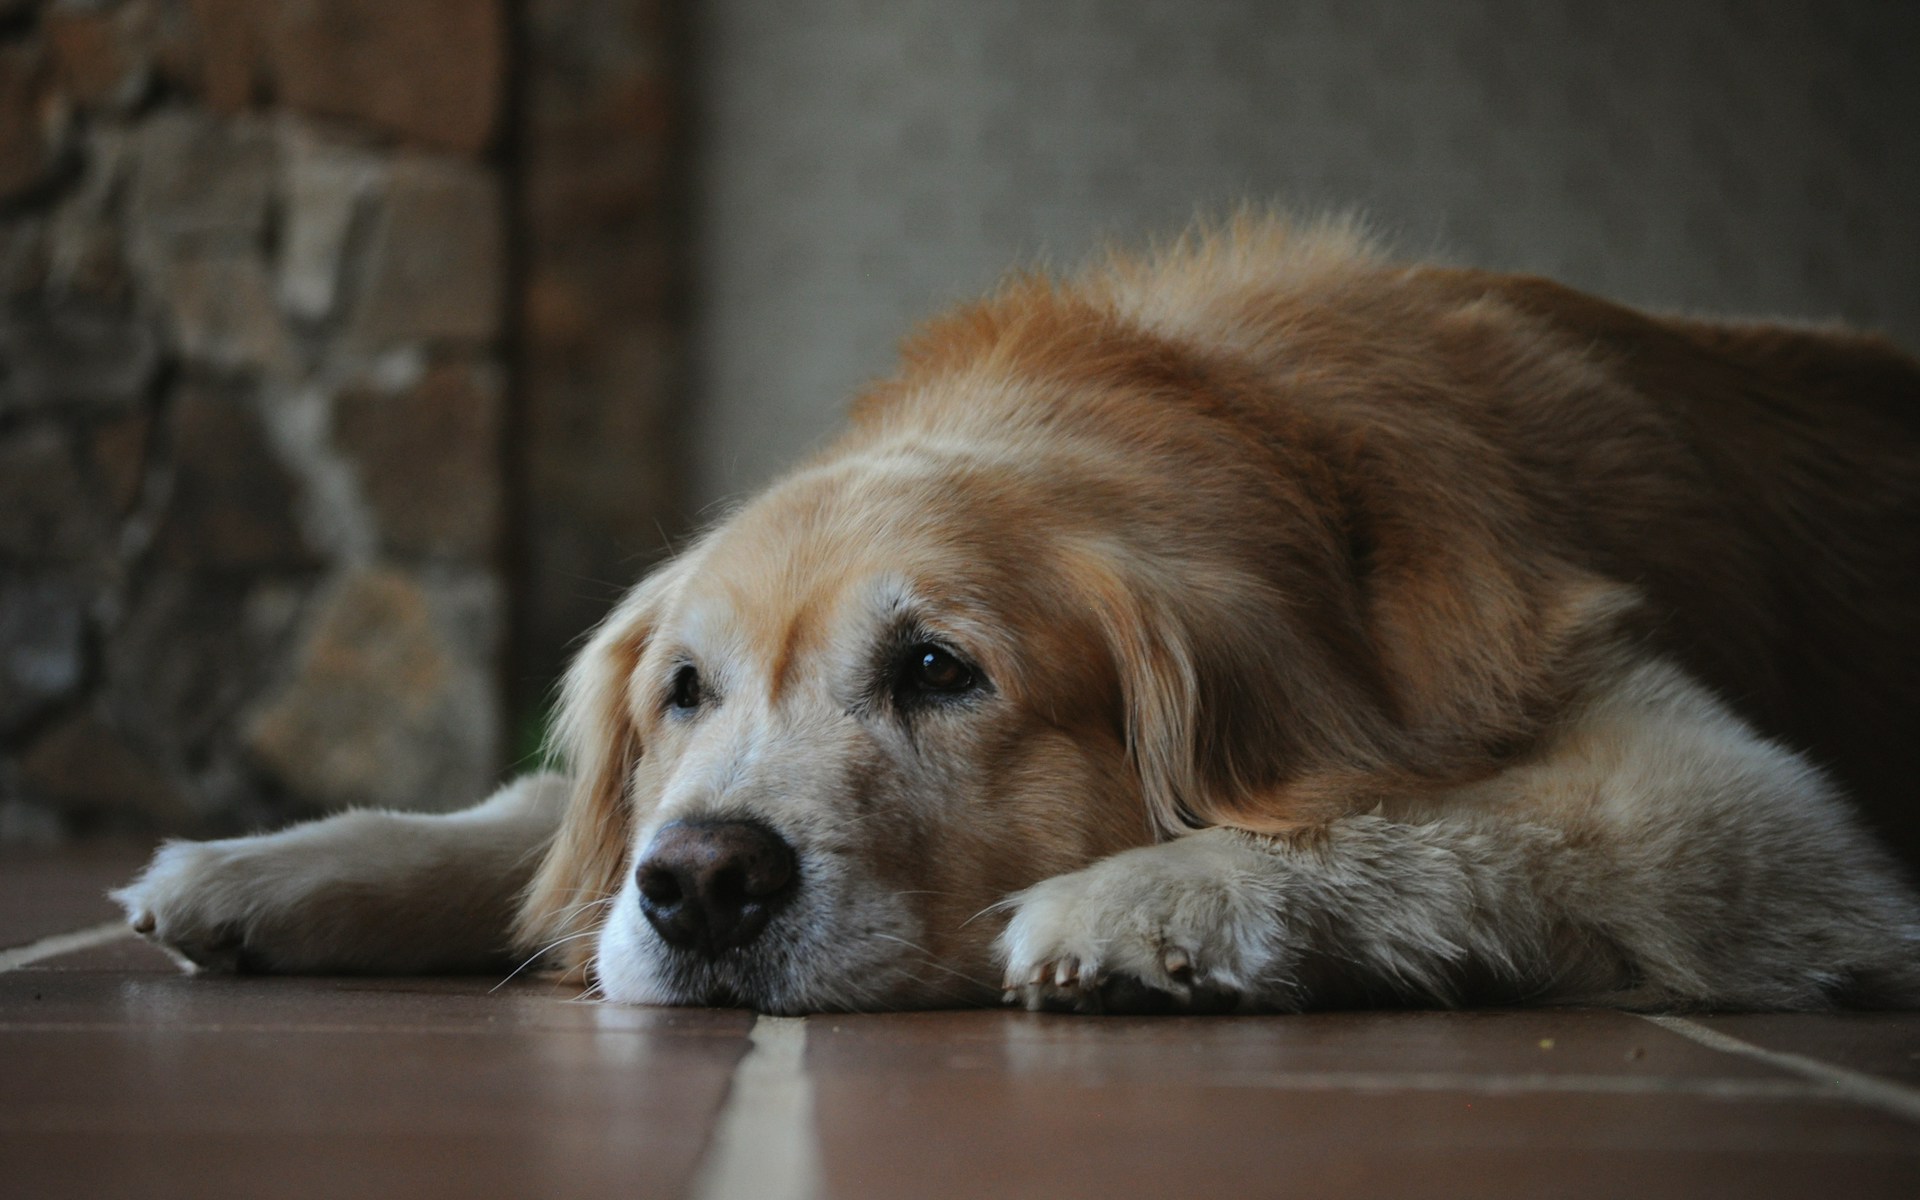 A senior dog lying on the floor indoors